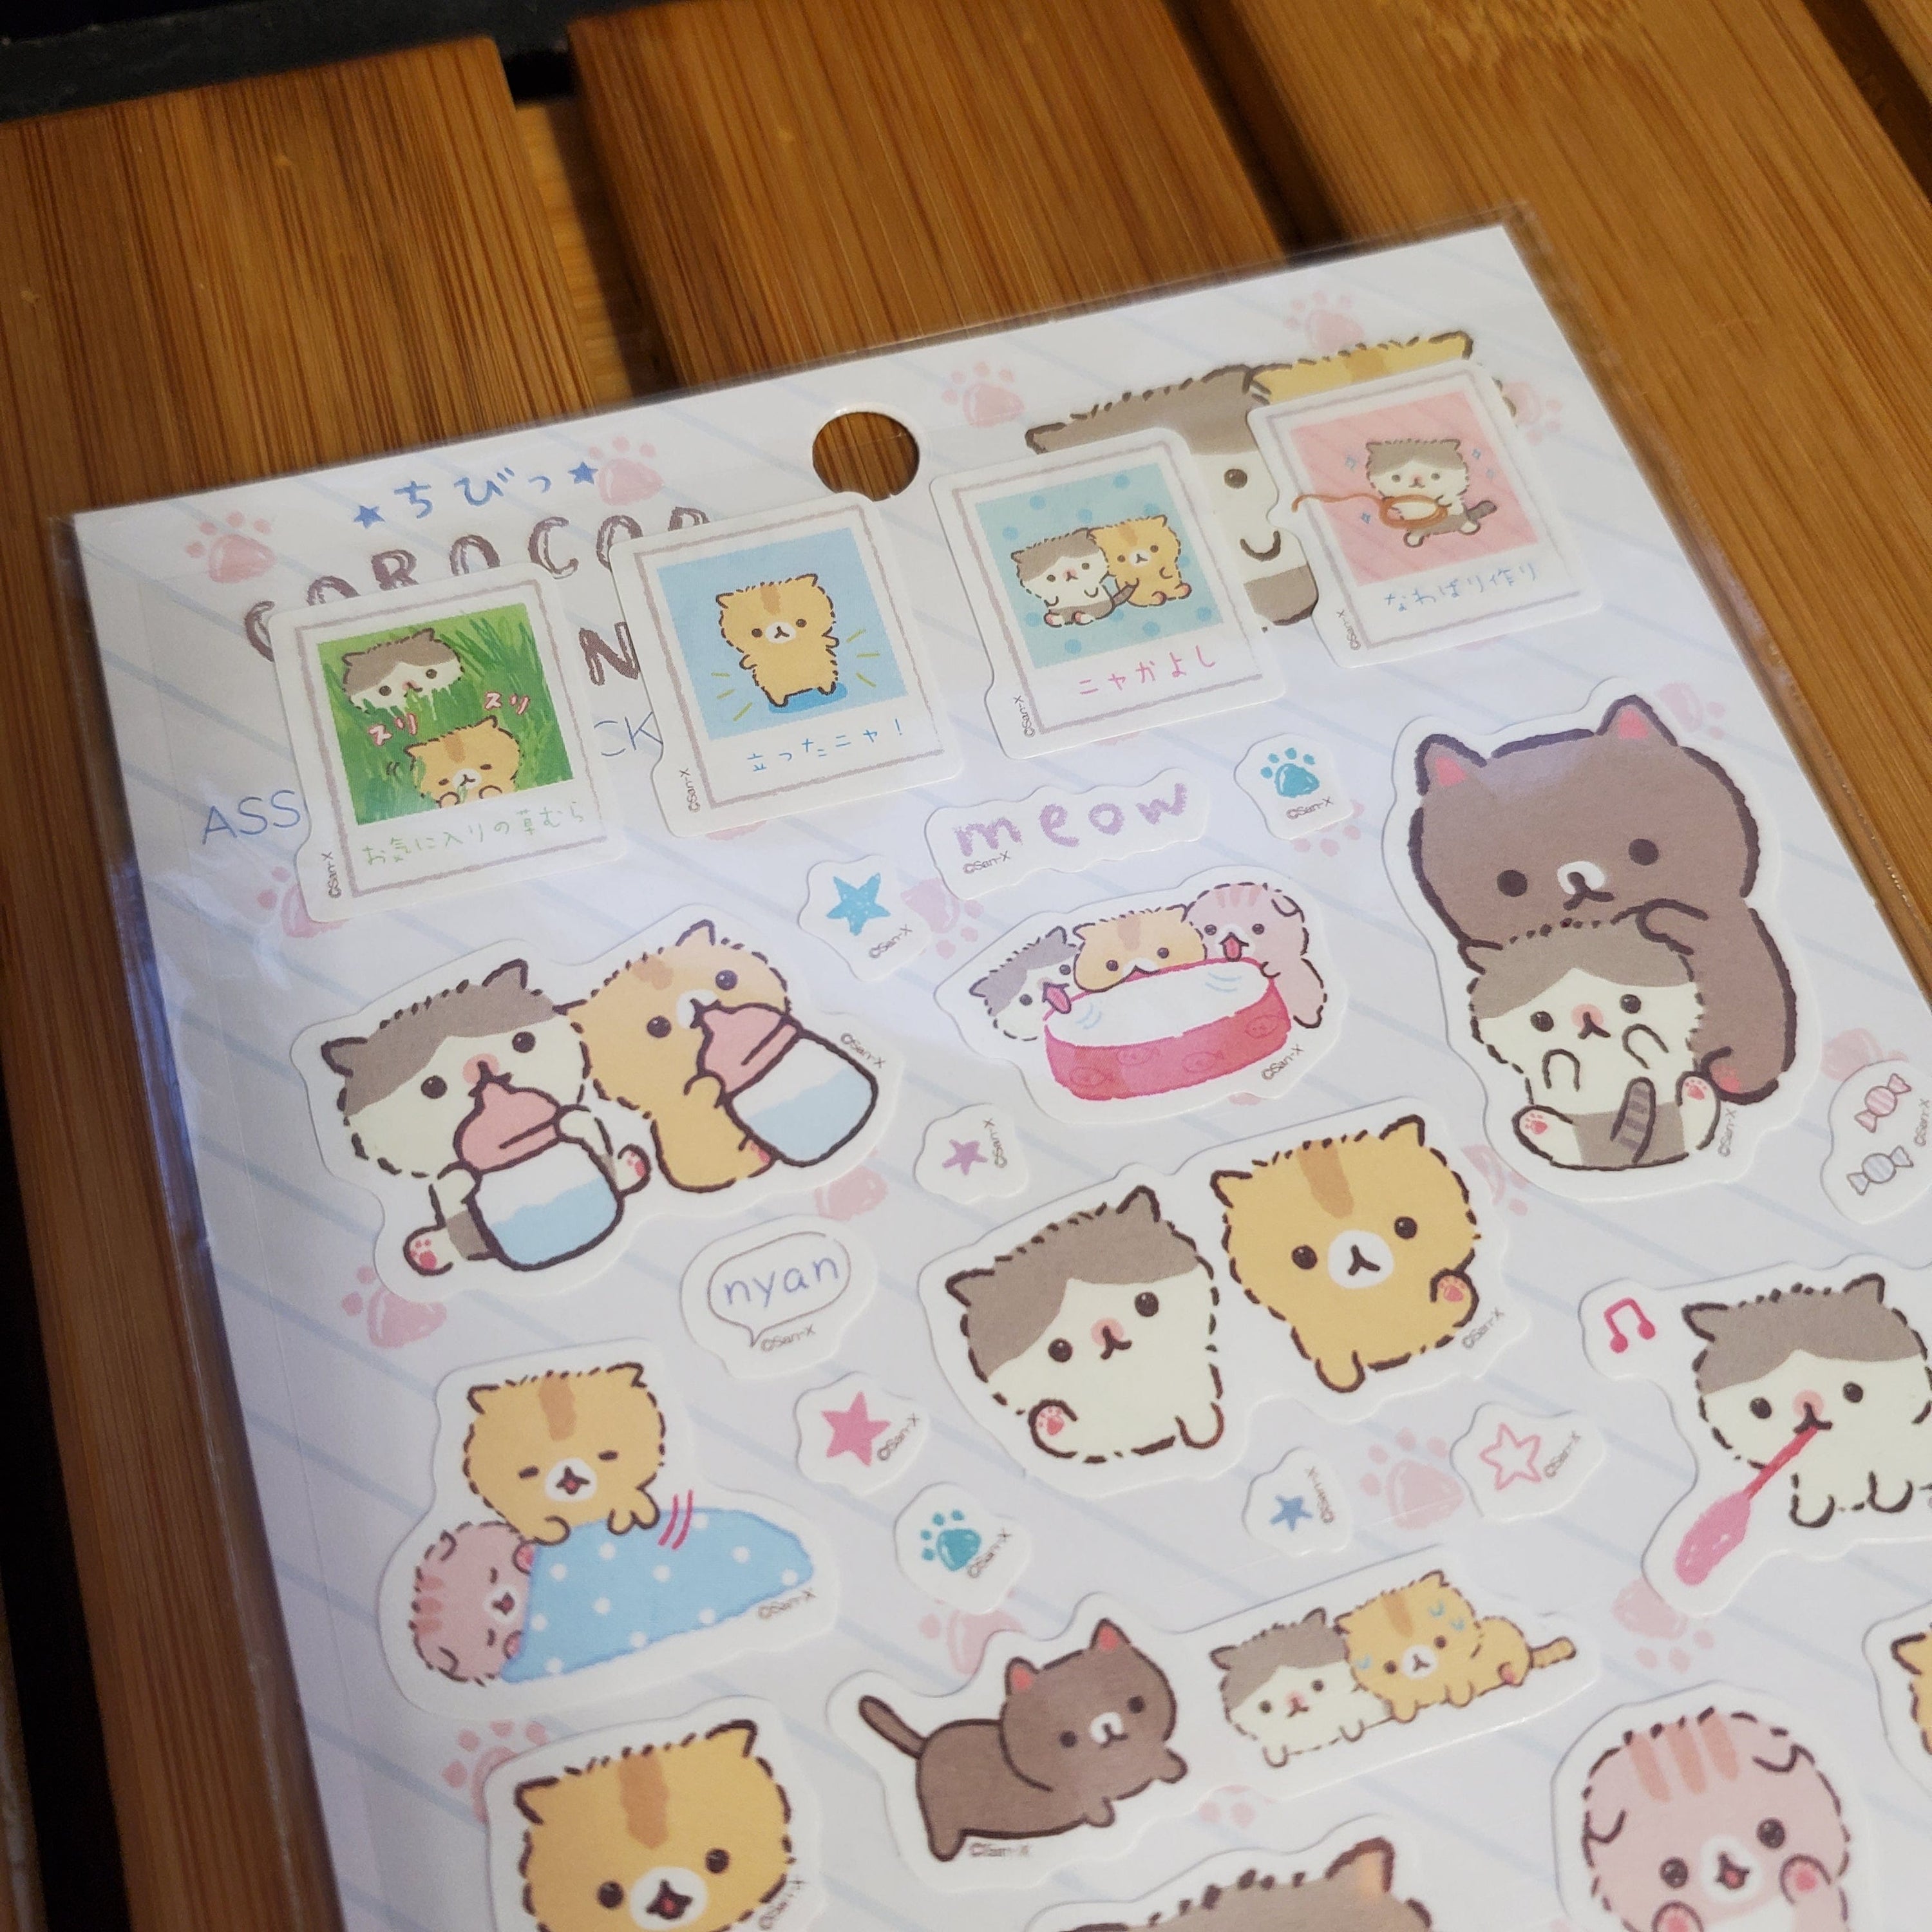 Aliquantum CoroCoro CoroNyan Kittens Stickers Kawaii Gifts